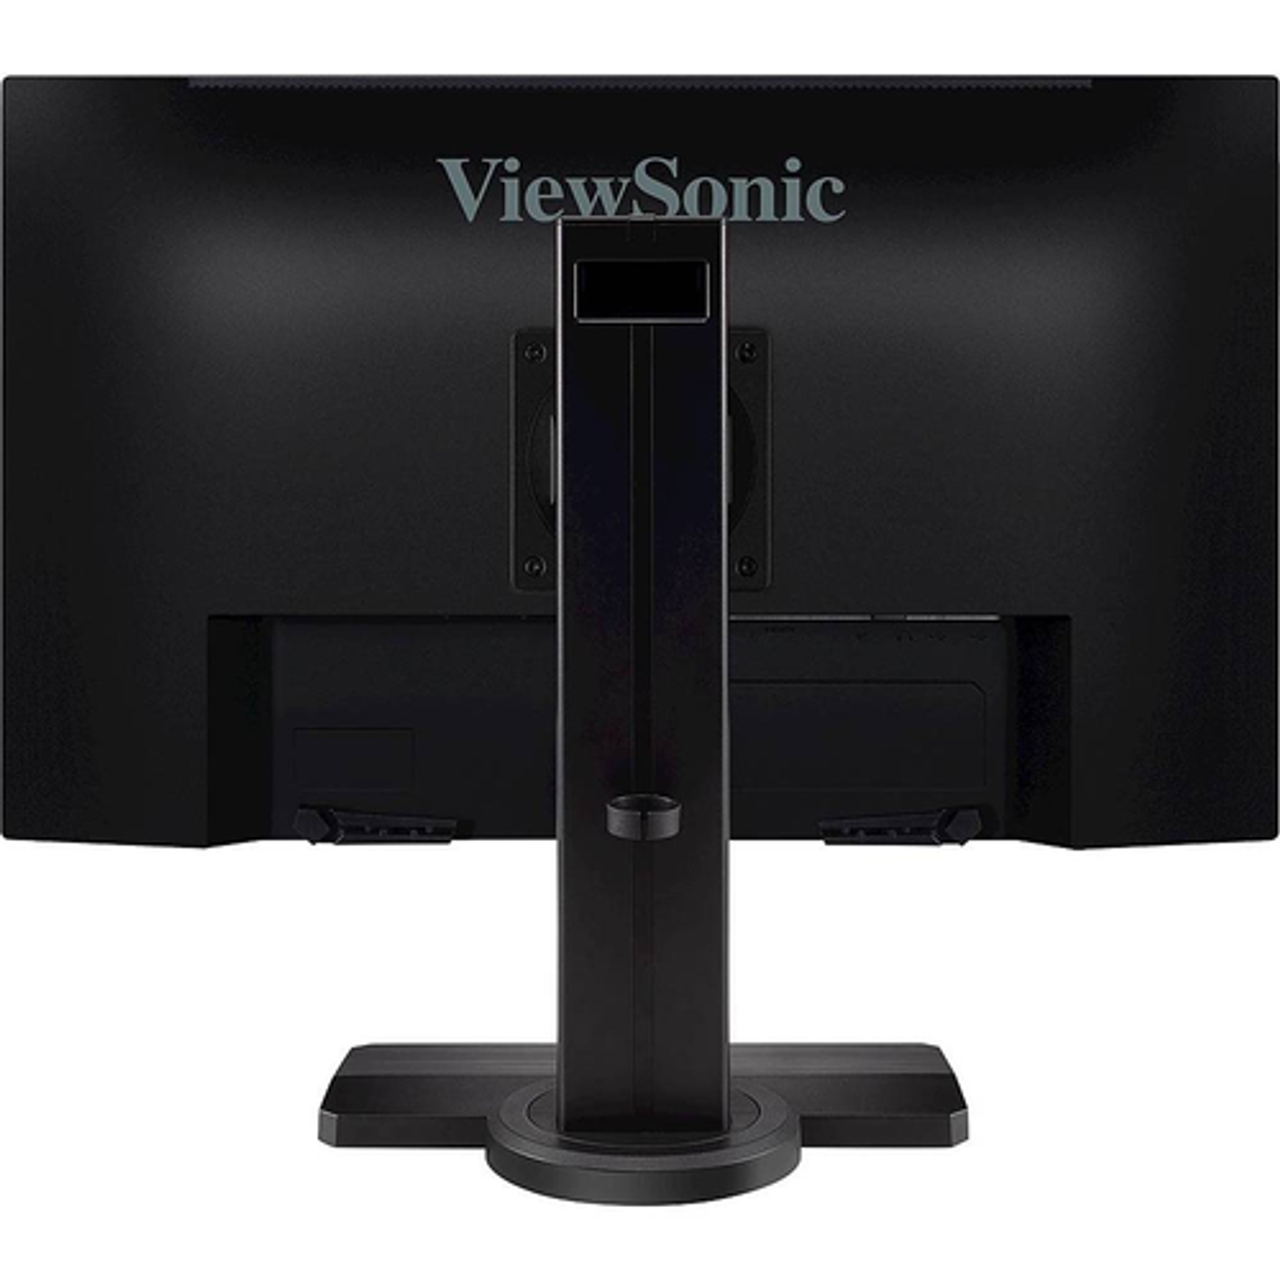 ViewSonic - 23.8 LCD FHD Monitor with HDR (DisplayPort USB, HDMI) - Black